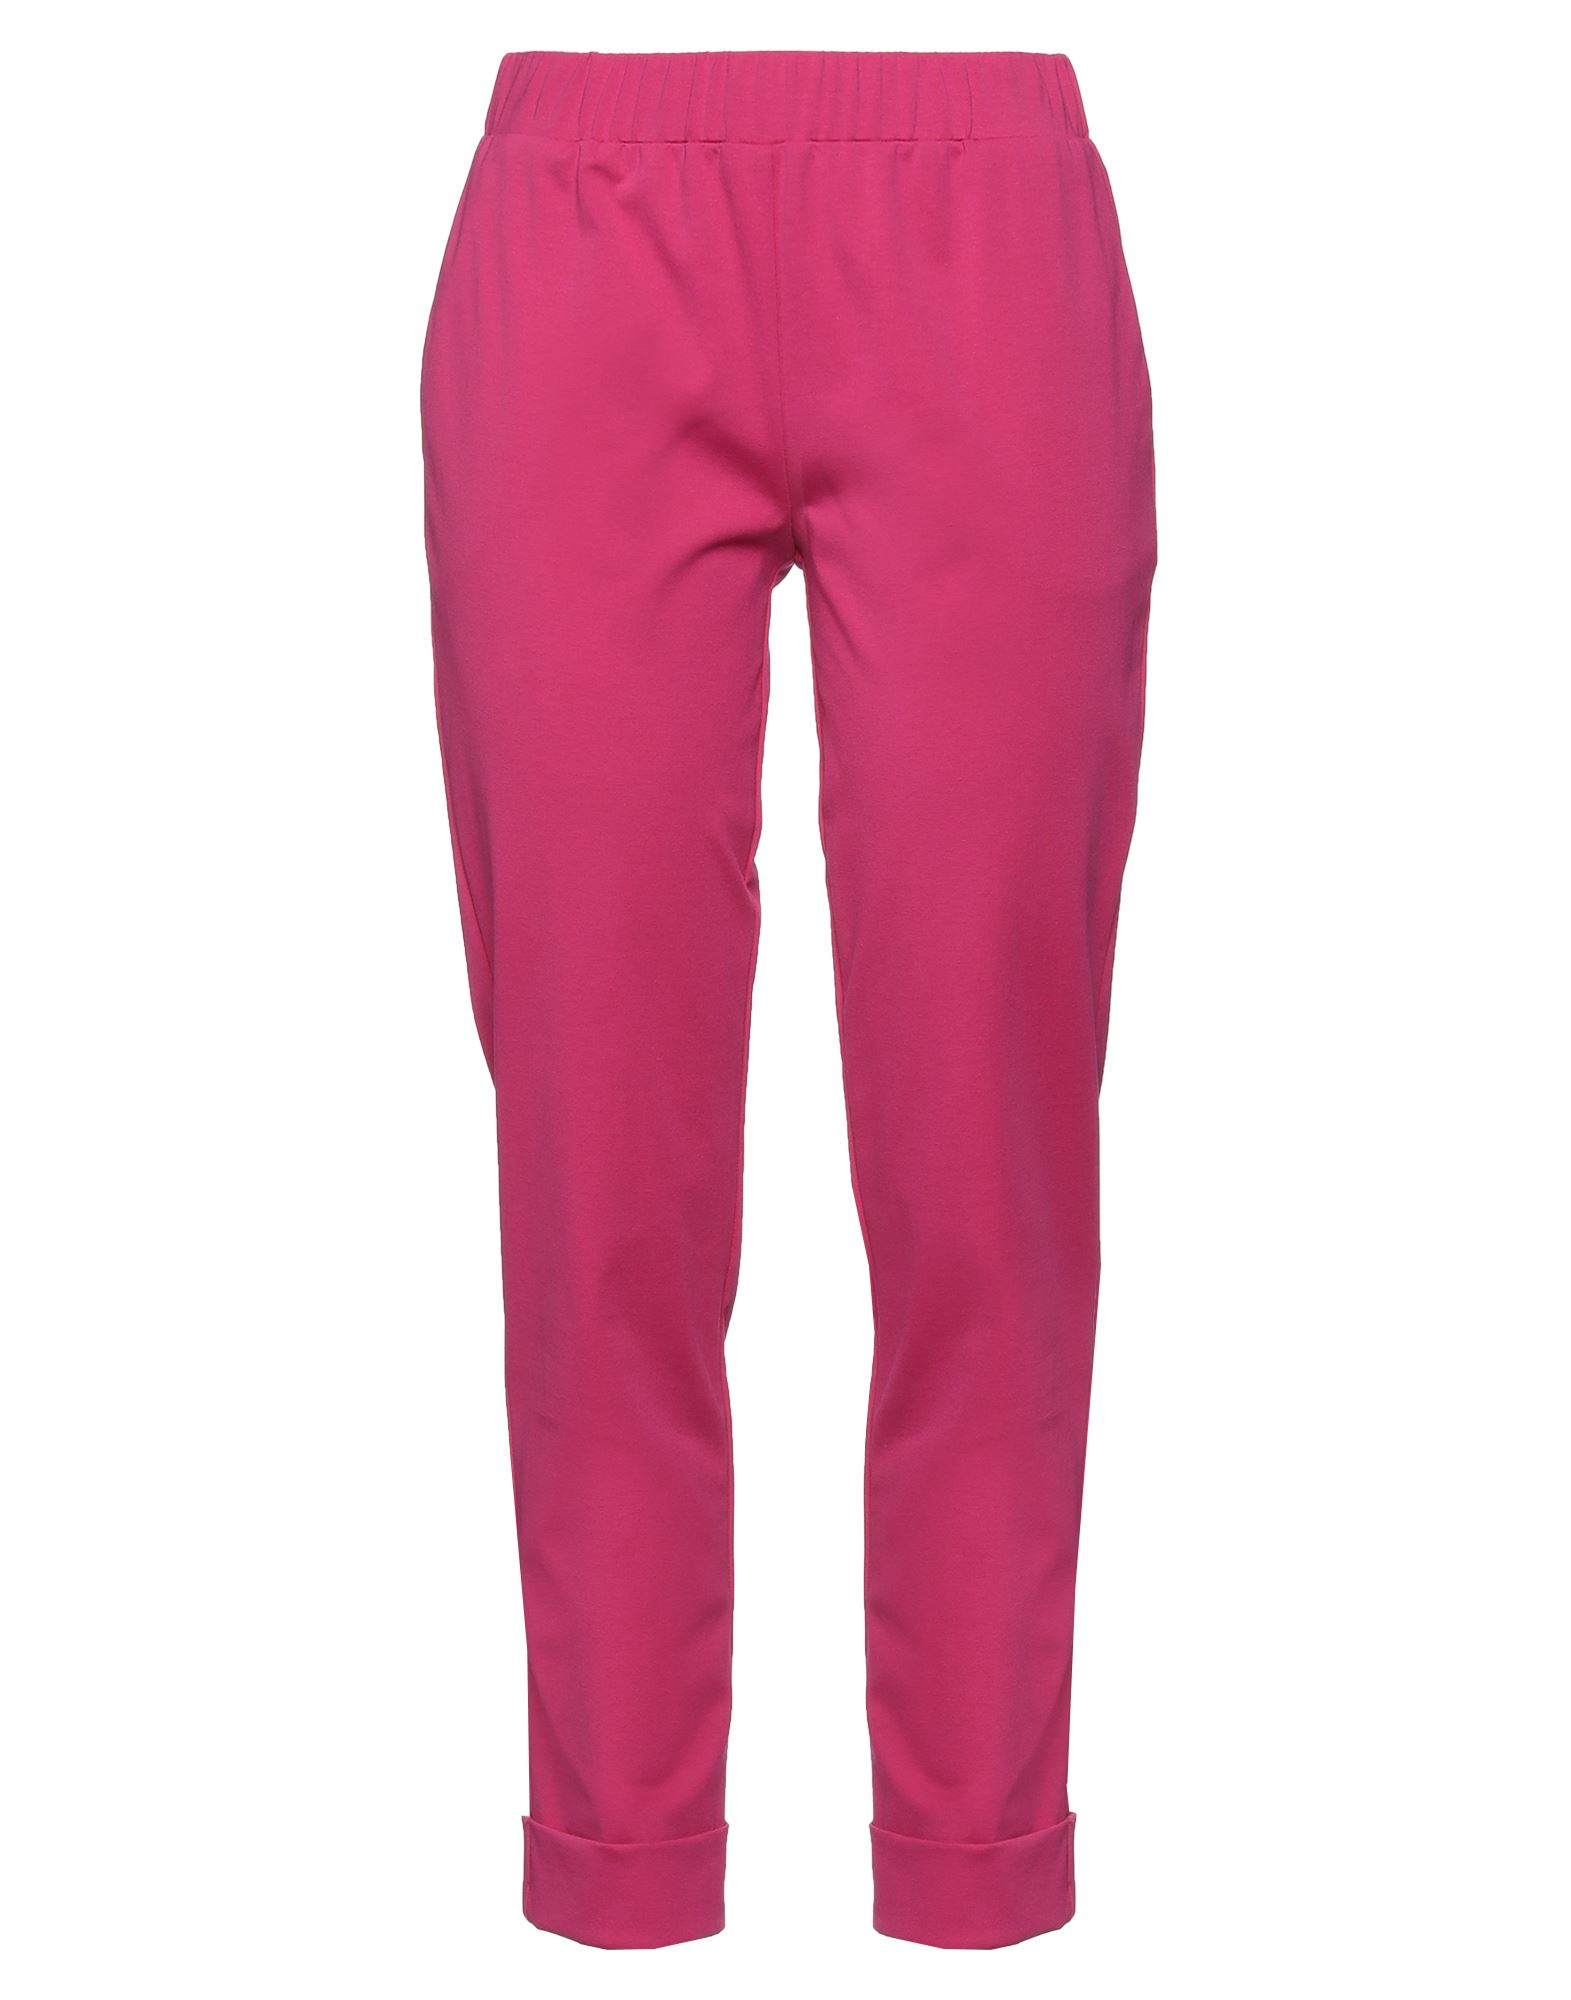 Shirtaporter Pants In Pink